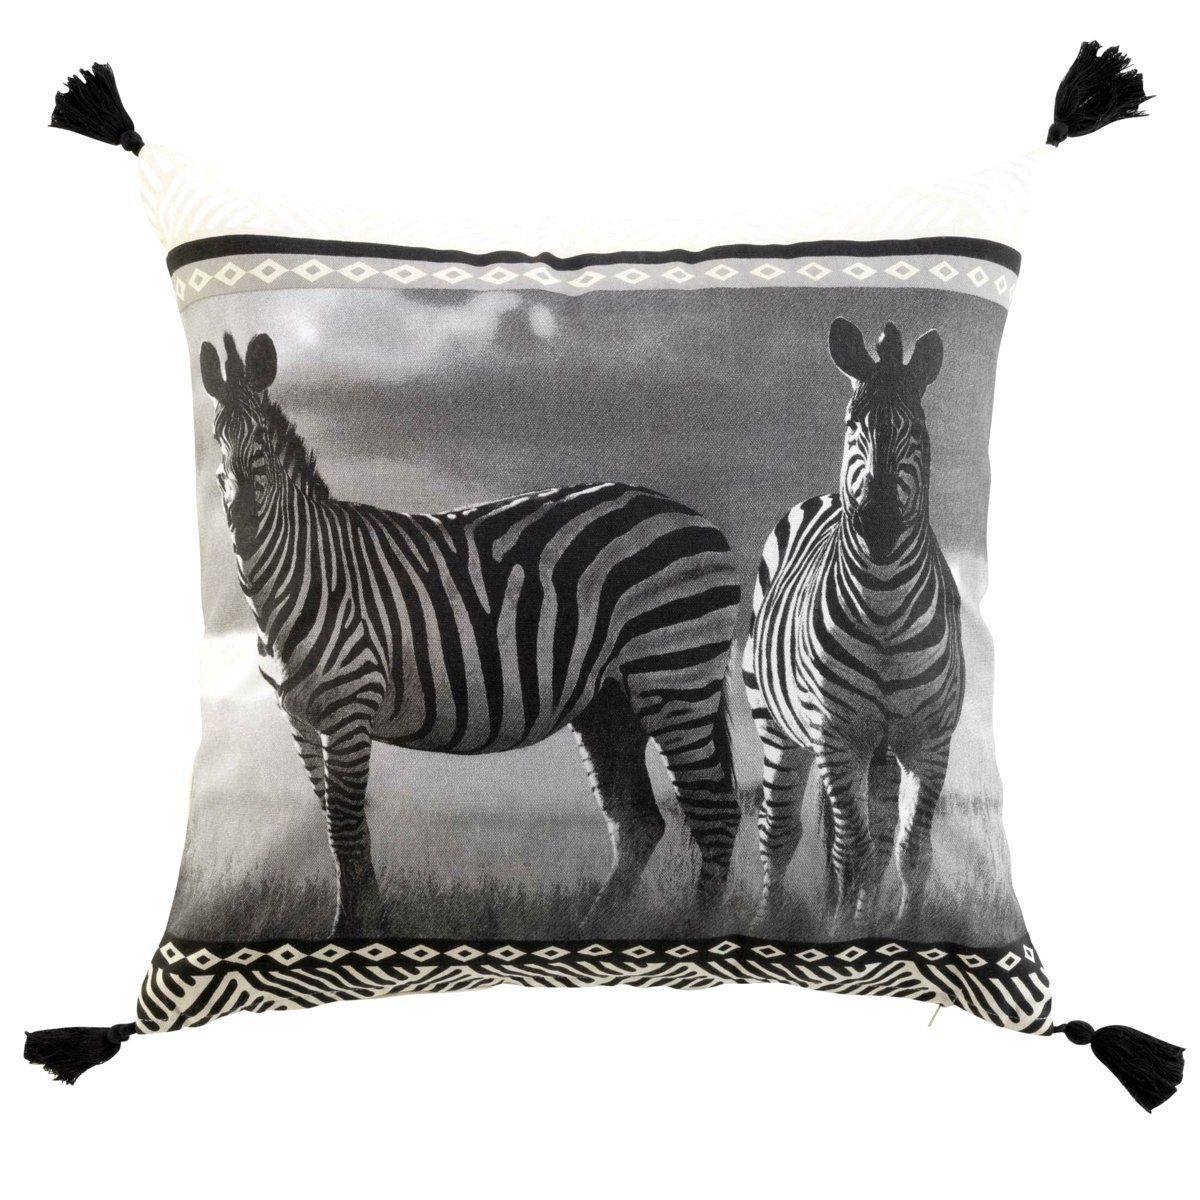 Macosa Home Dekokissen schwarz weiß Zebra 50x50 cm inkl. Füllung Baumwolle, Sofakissen Dekokissen Zierkissen